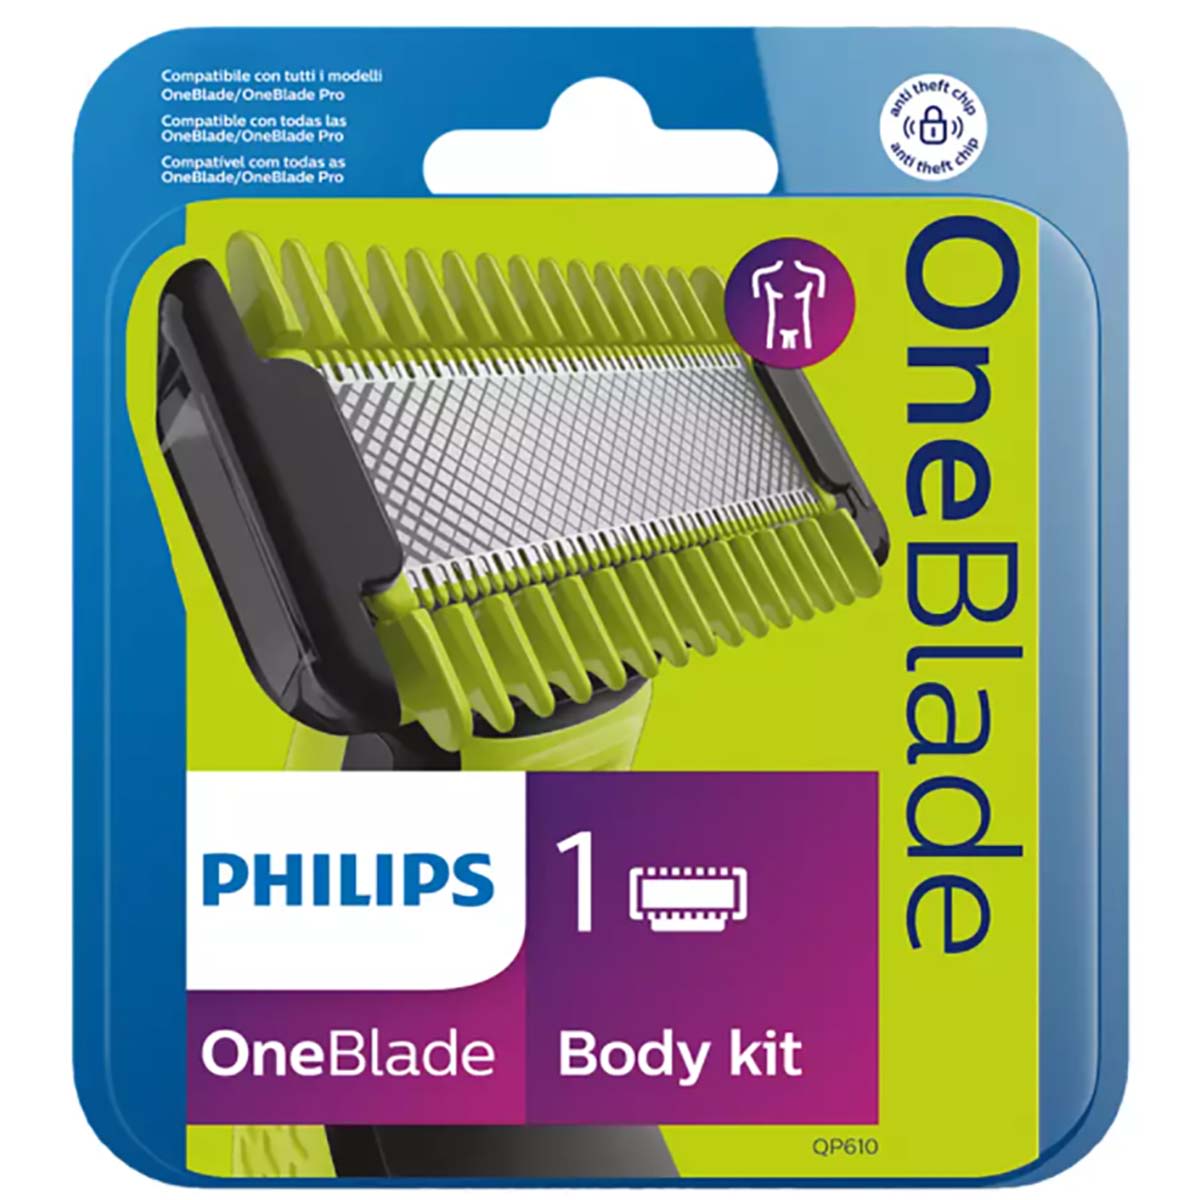 Philips QP610/50 OneBlade Body-pakkaus  verkkokauppa